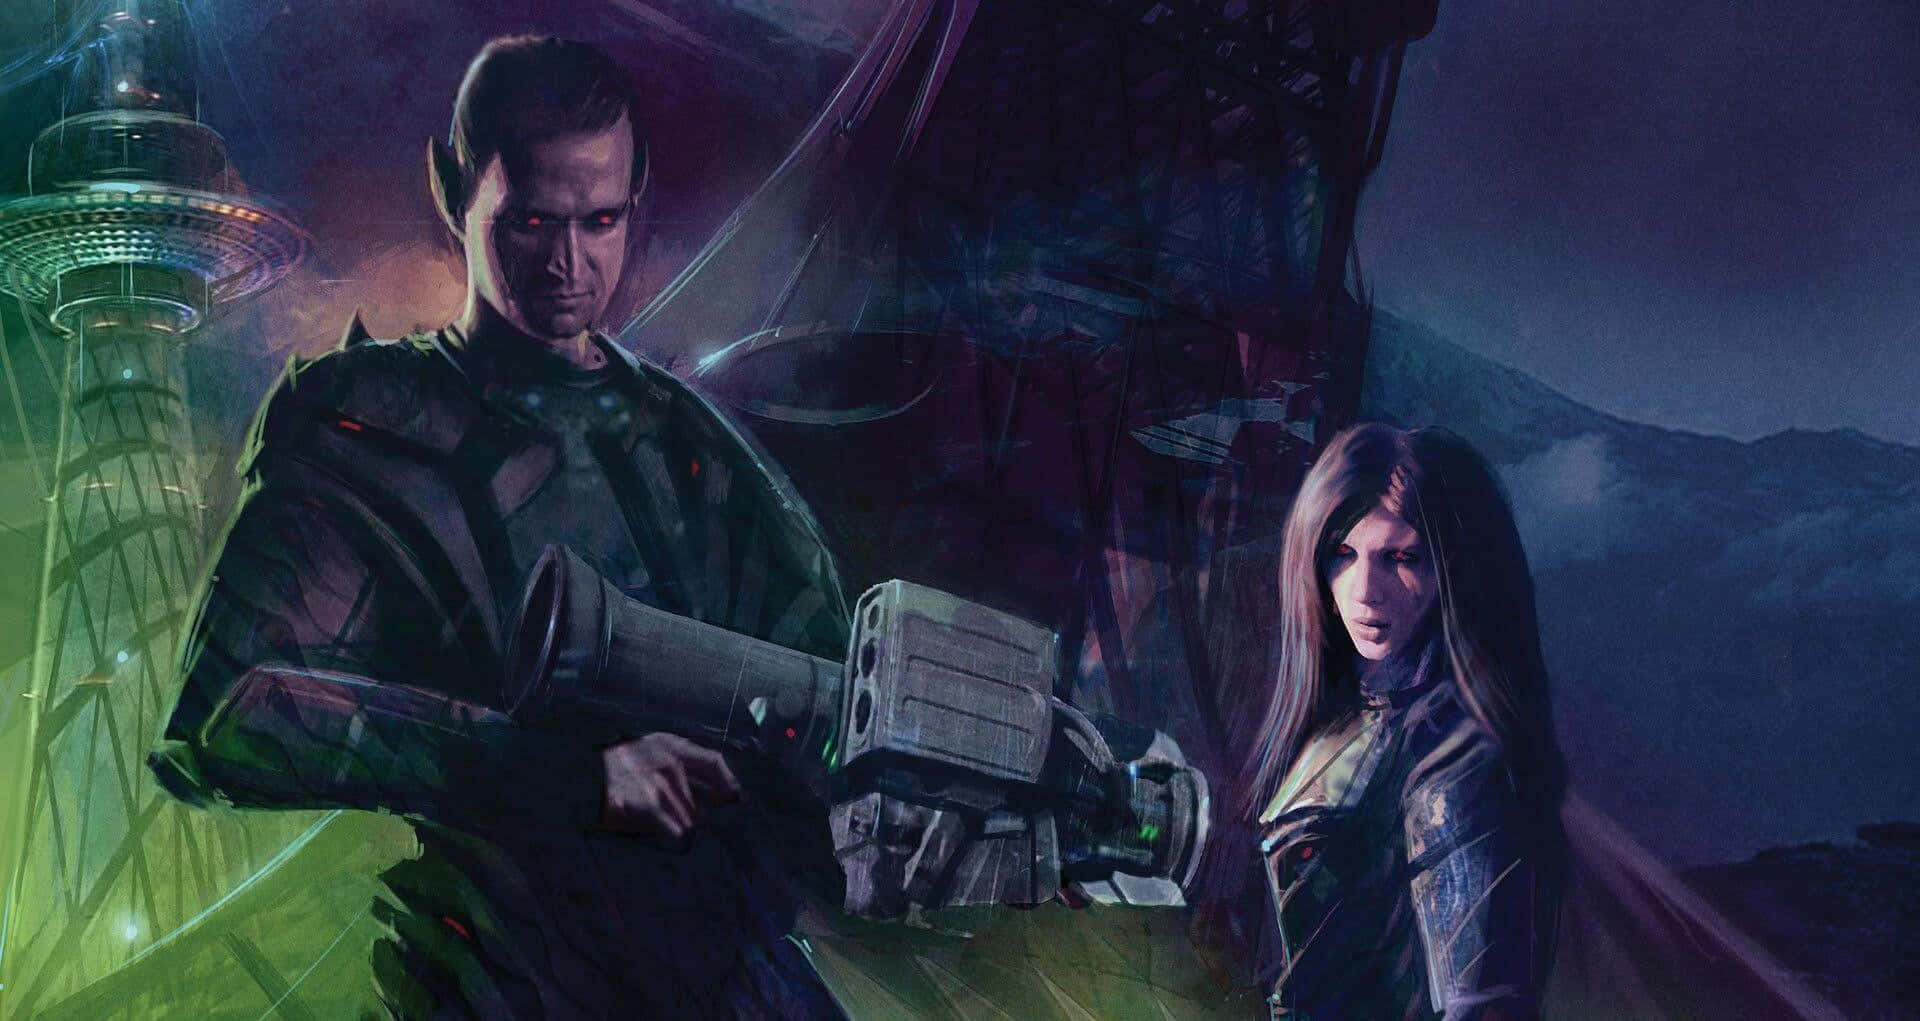 Cyberpunk møder Fantasy i den Ikoniske Shadowrun Univers Wallpaper